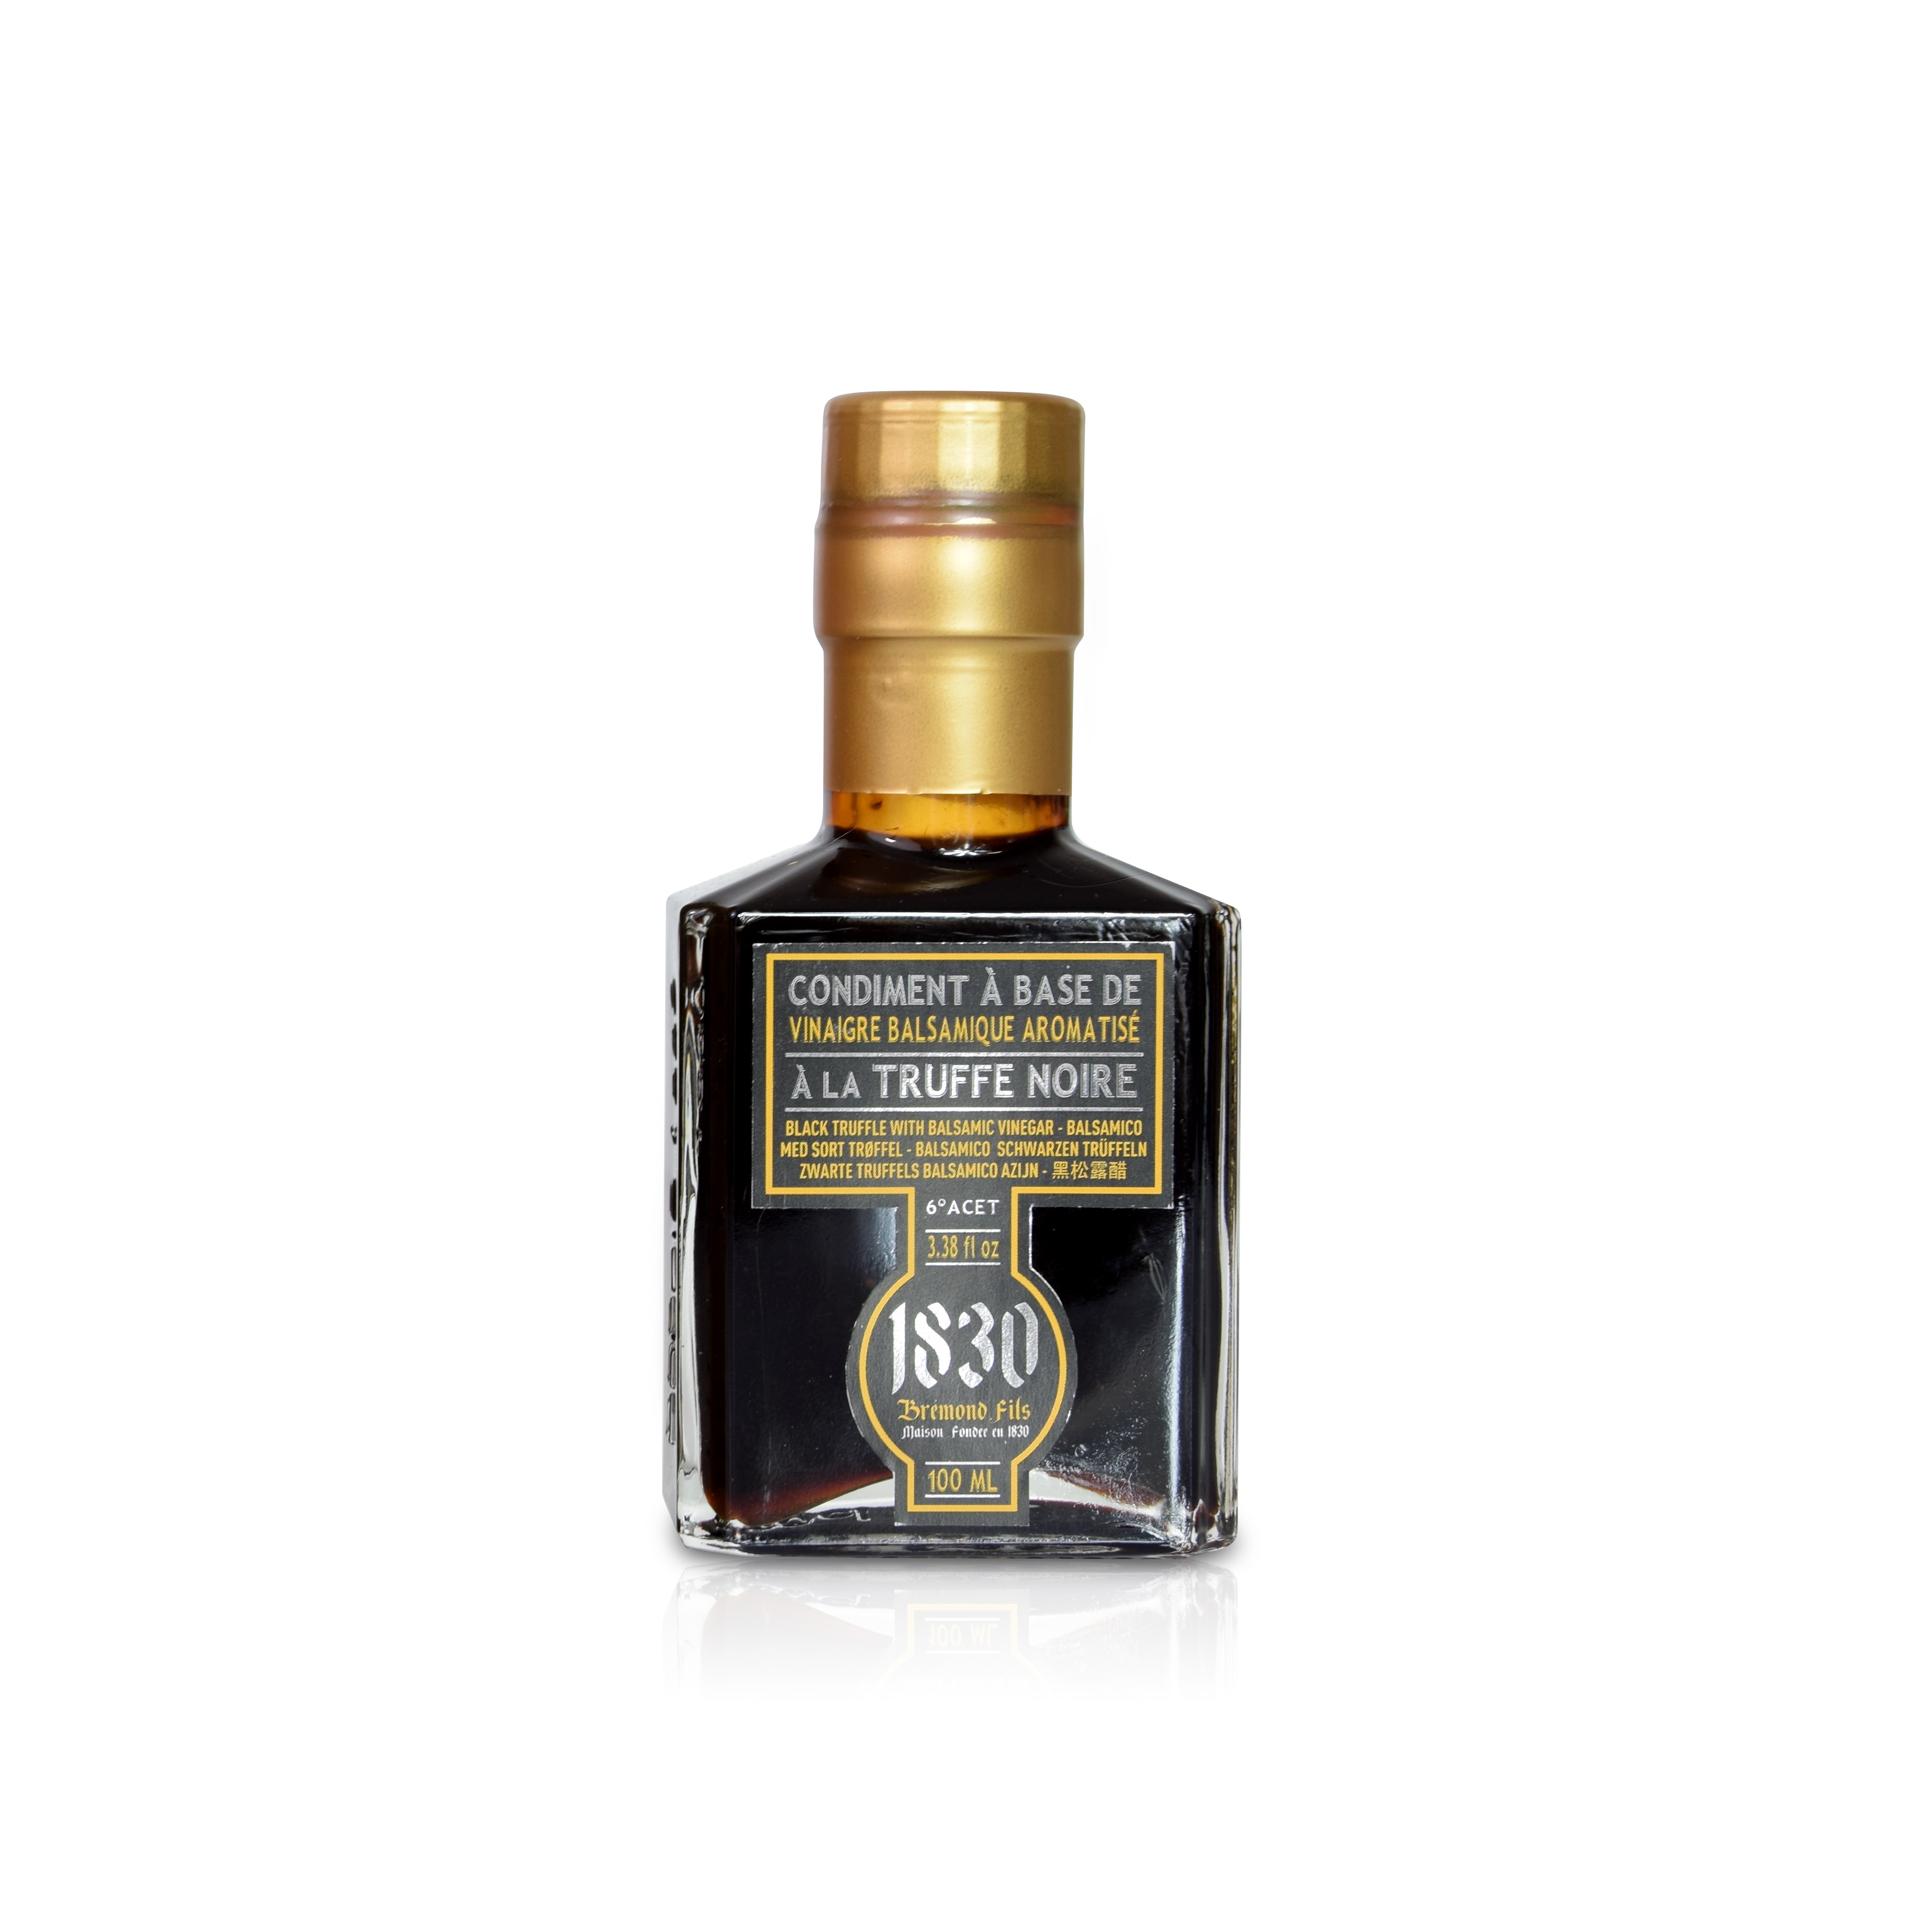  Otet Balsamic cu Aroma de Trufe, 100 ml | Maison Bremond 1830 